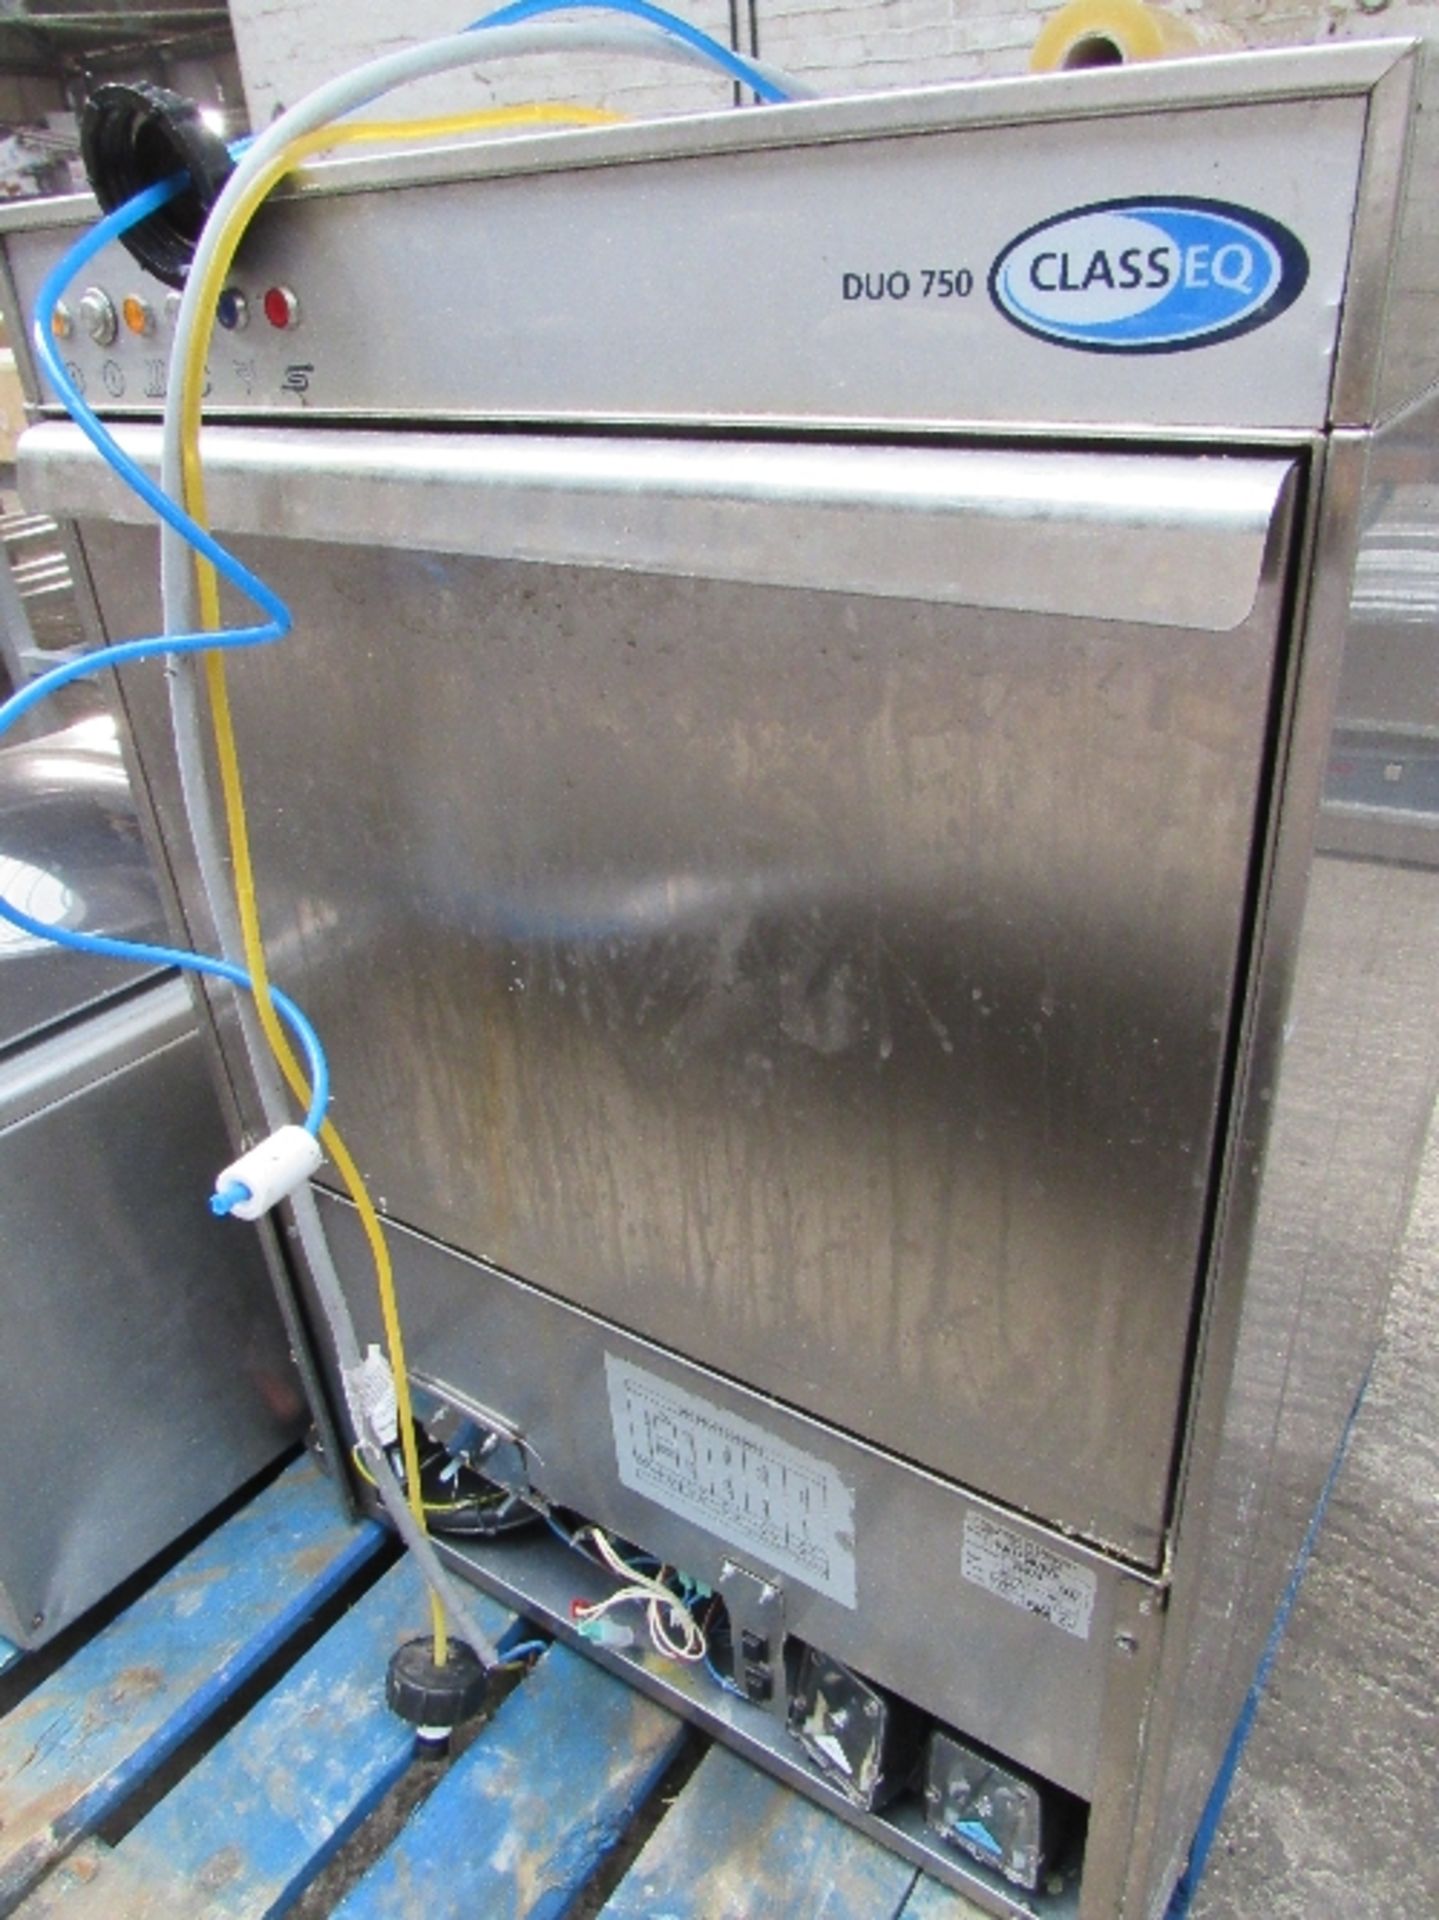 Classeq Duo 750 dishwasher - Image 2 of 2